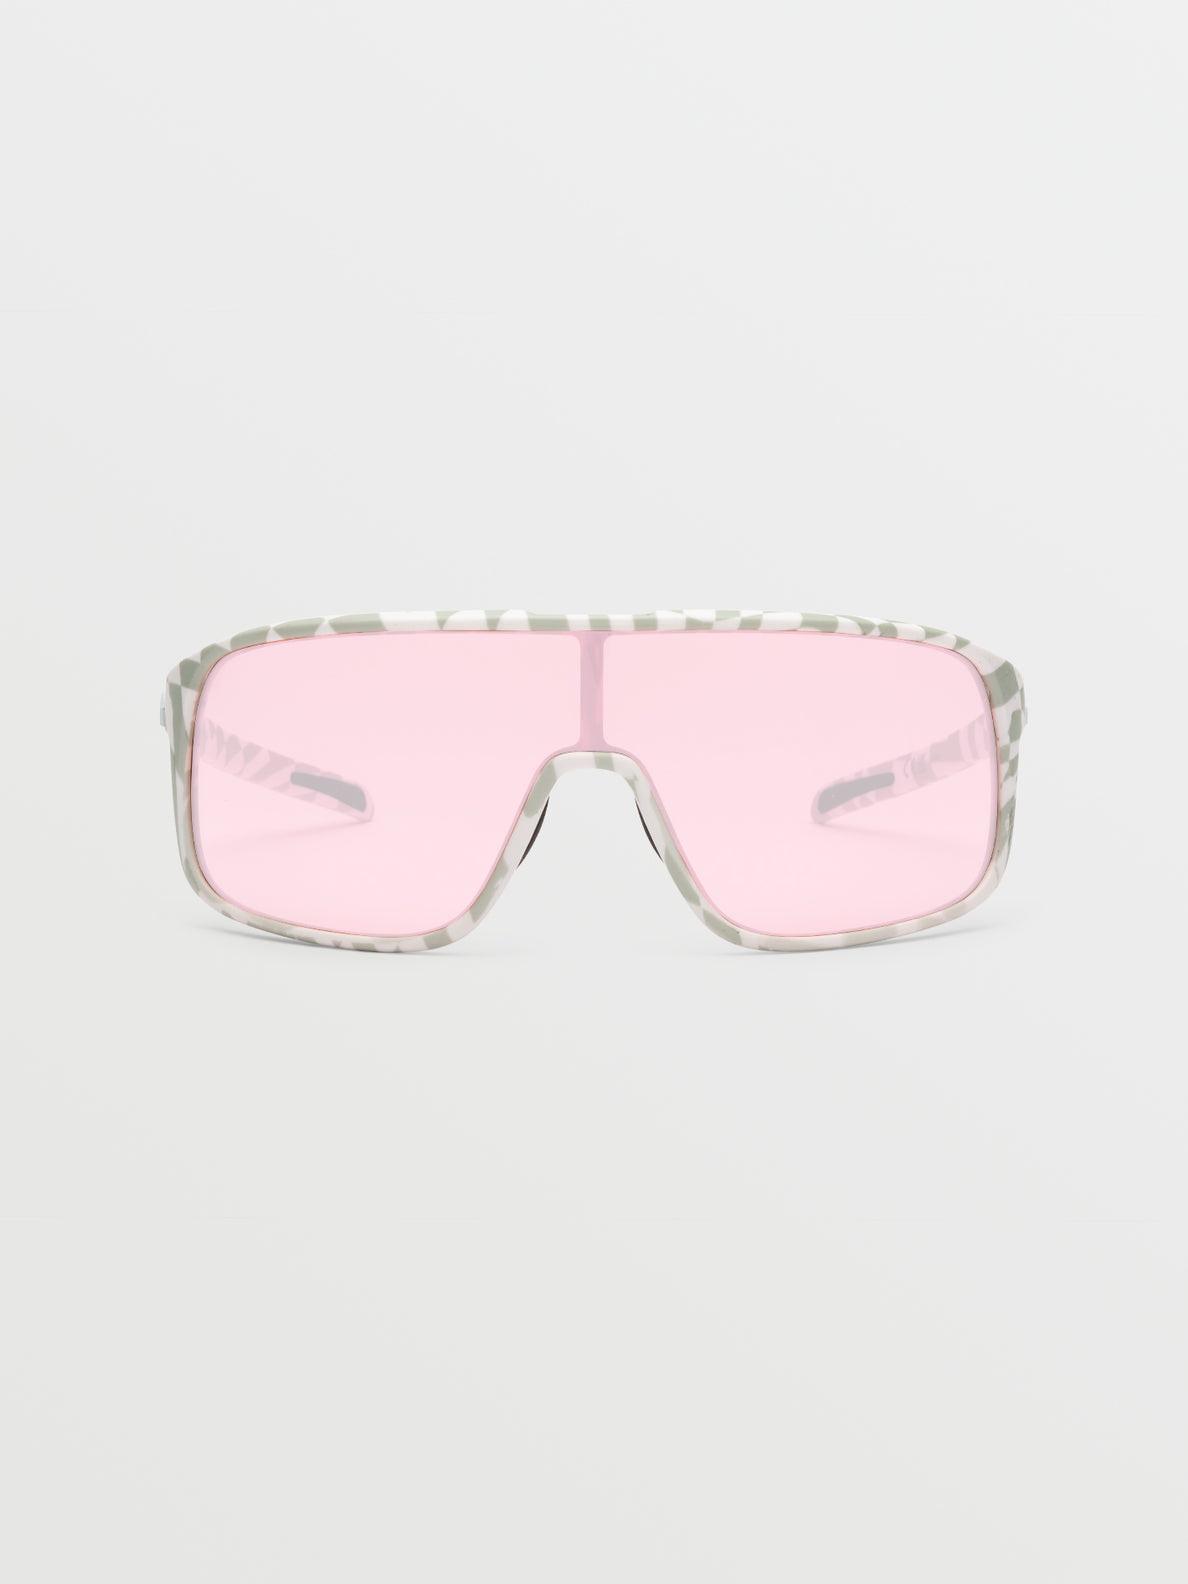 Macho Sunglasses - Check Her/Rose